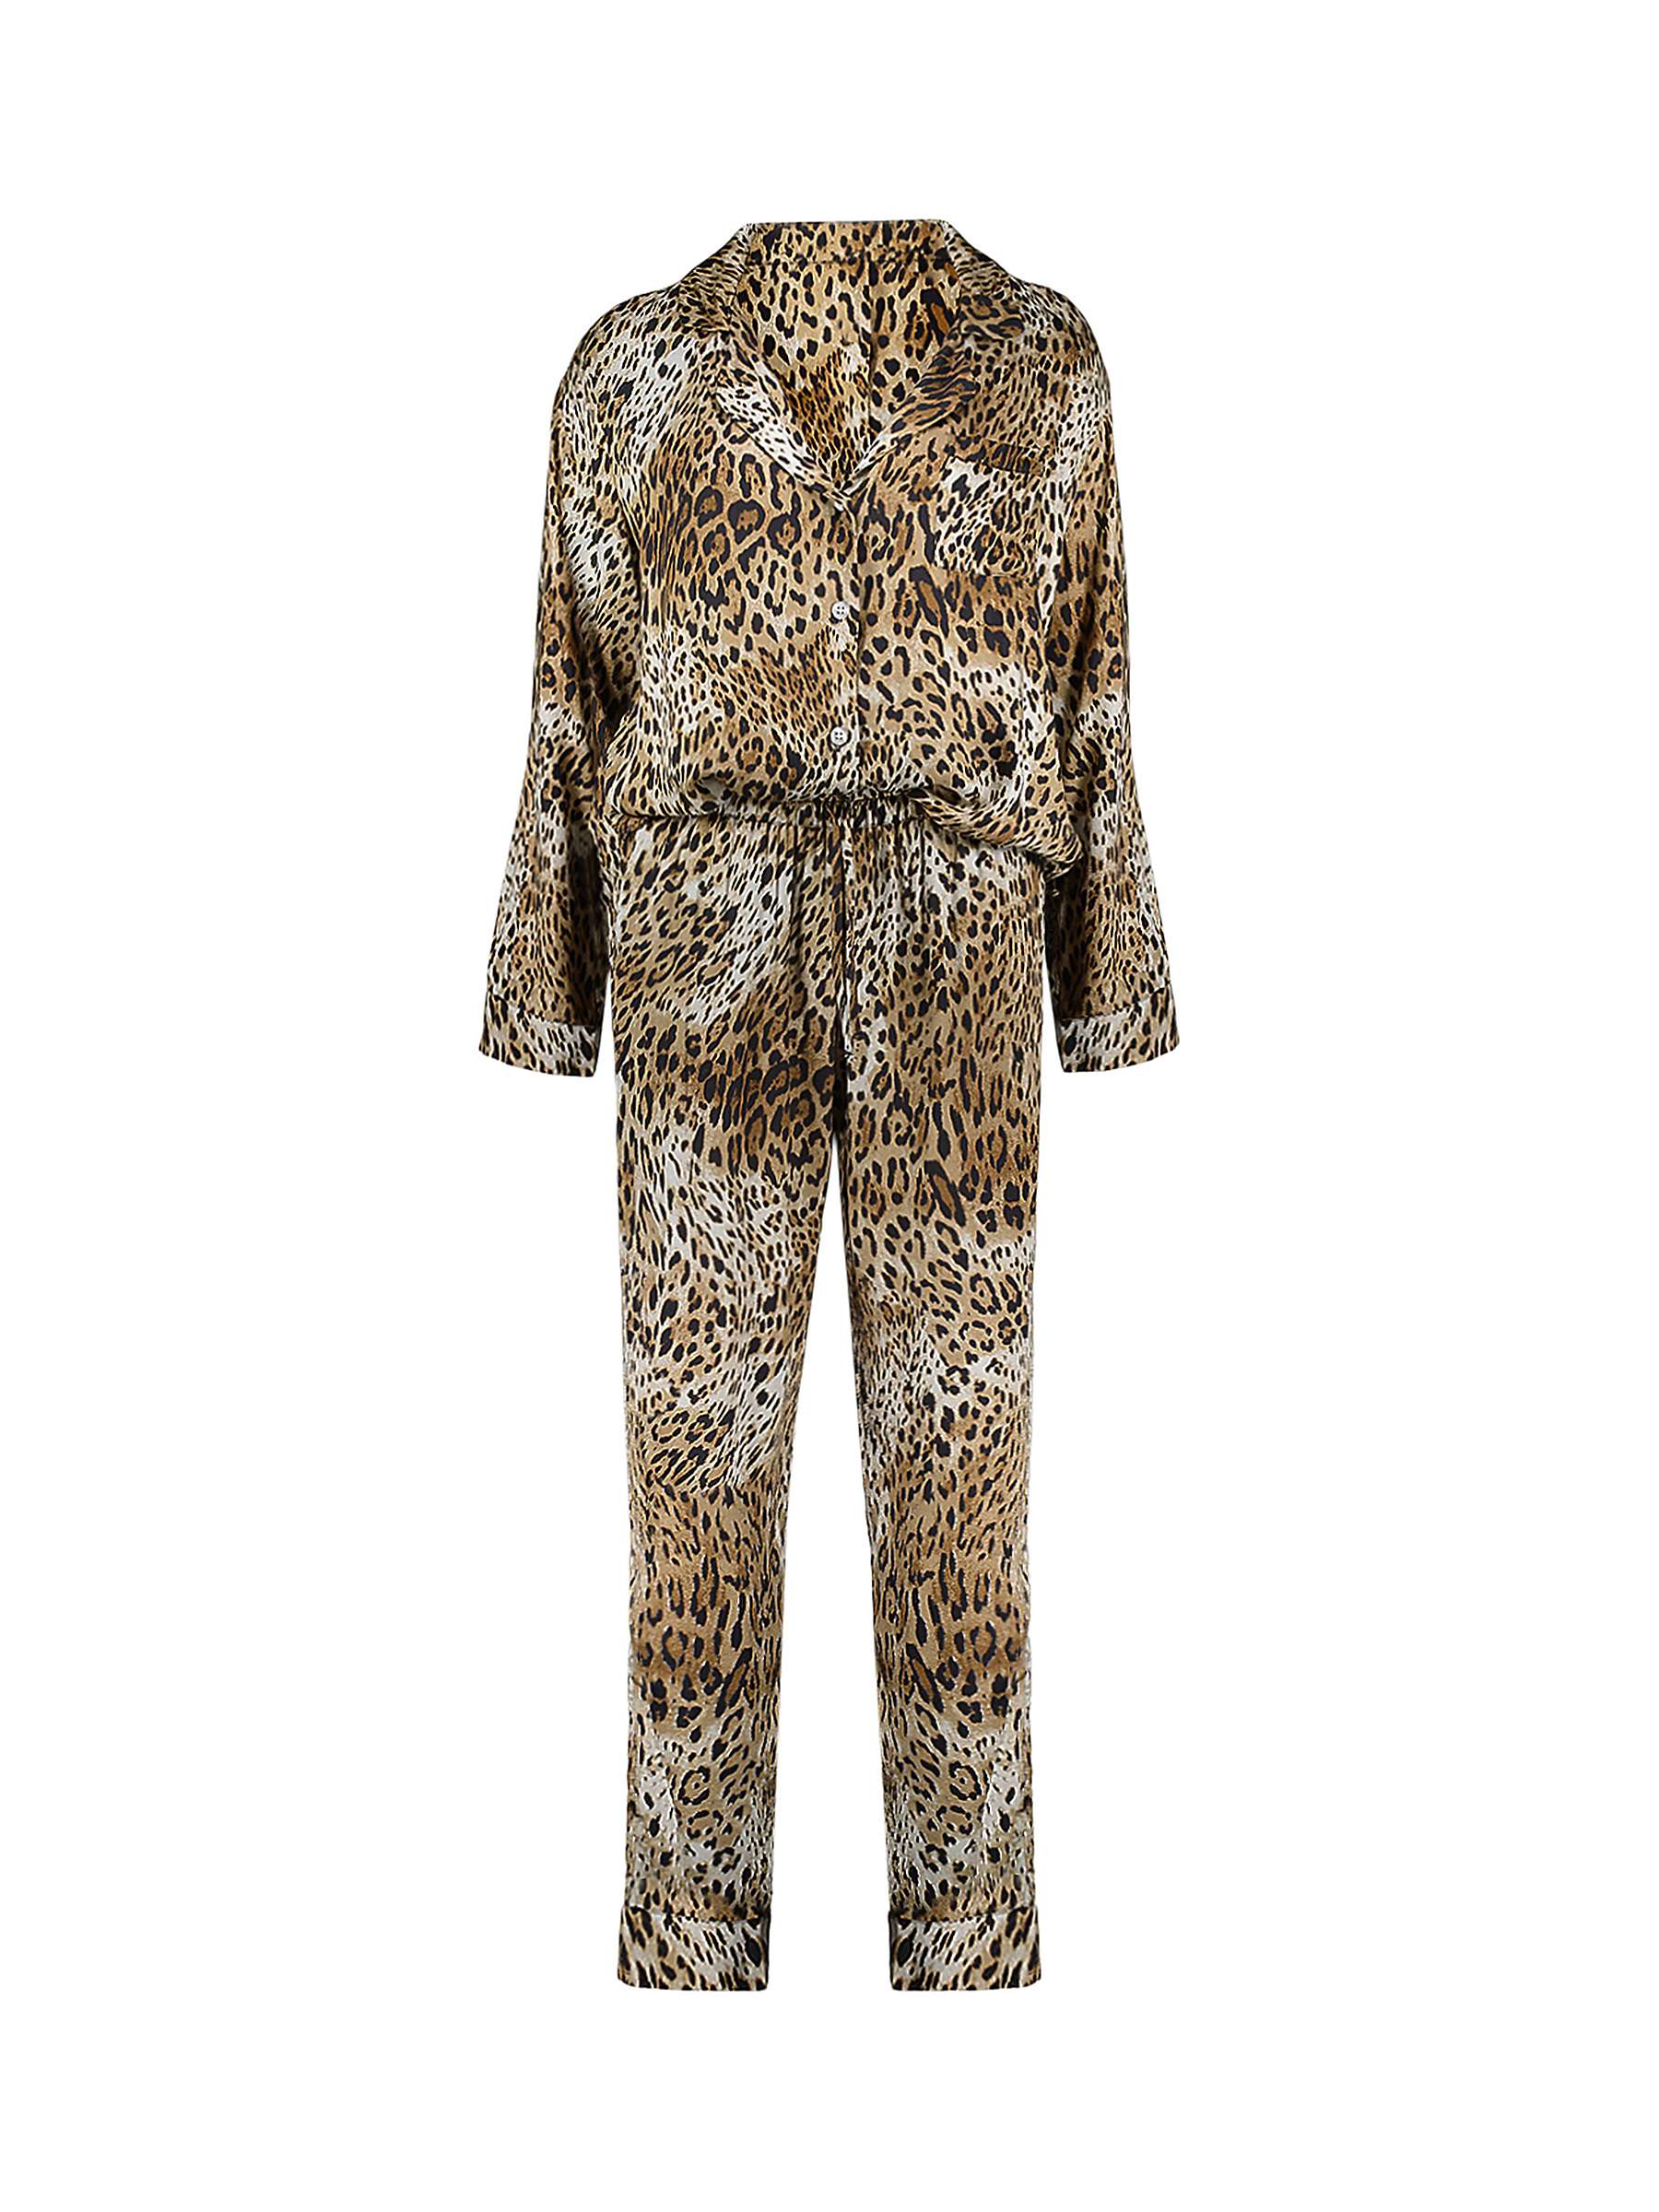 Buy Baukjen Mia Ecovero Leopard Print Pyjama Set, Natural Leopard Online at johnlewis.com